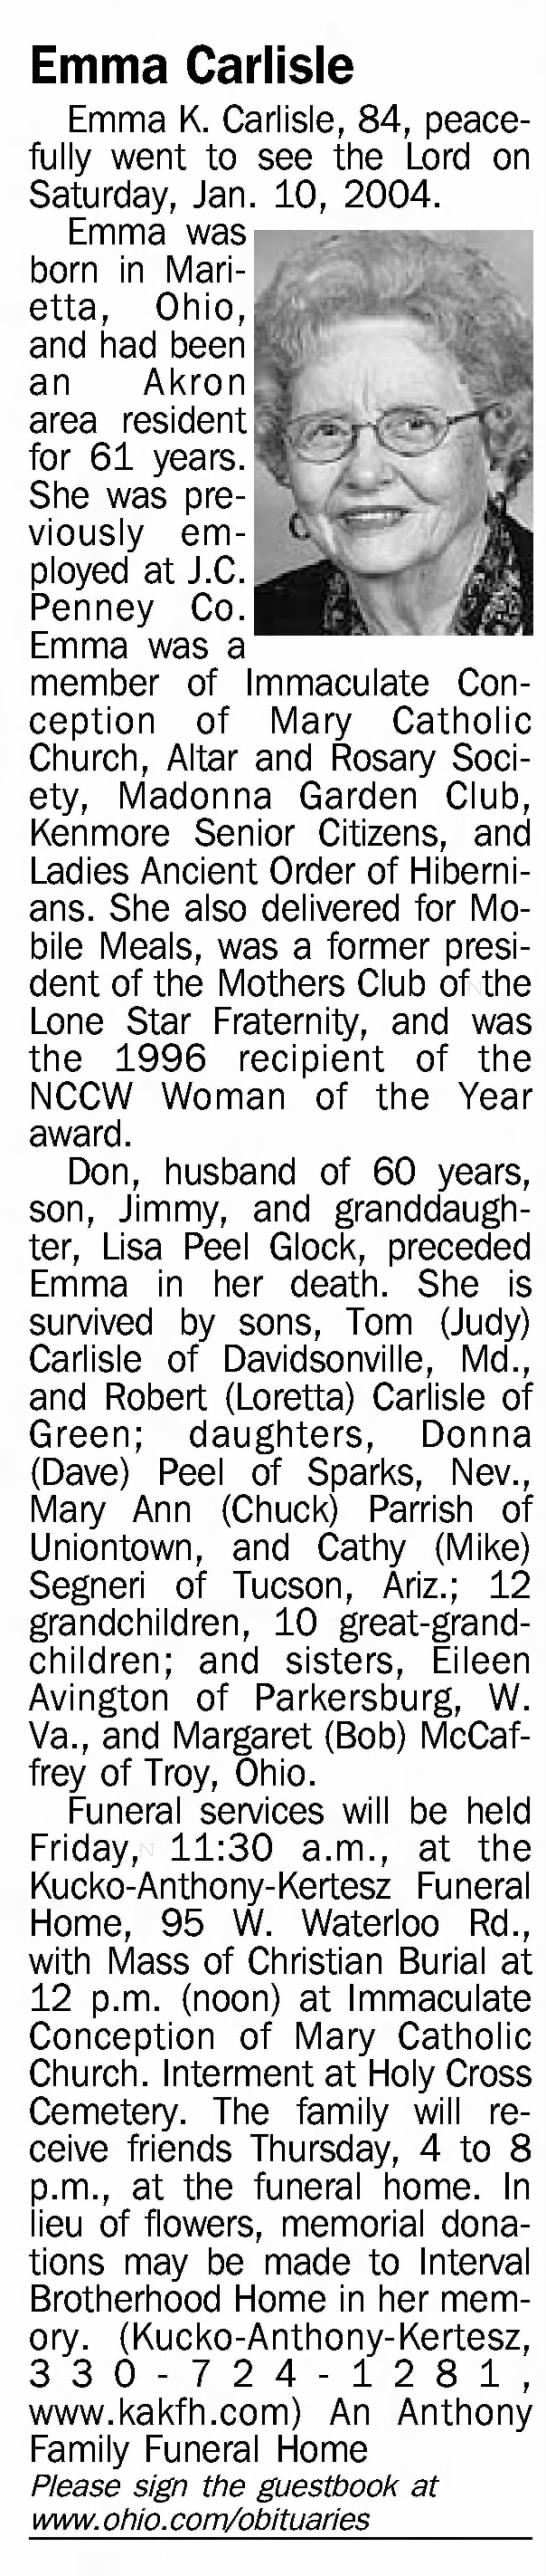 Obituary for Emma K. Carlisle (Aged 84)